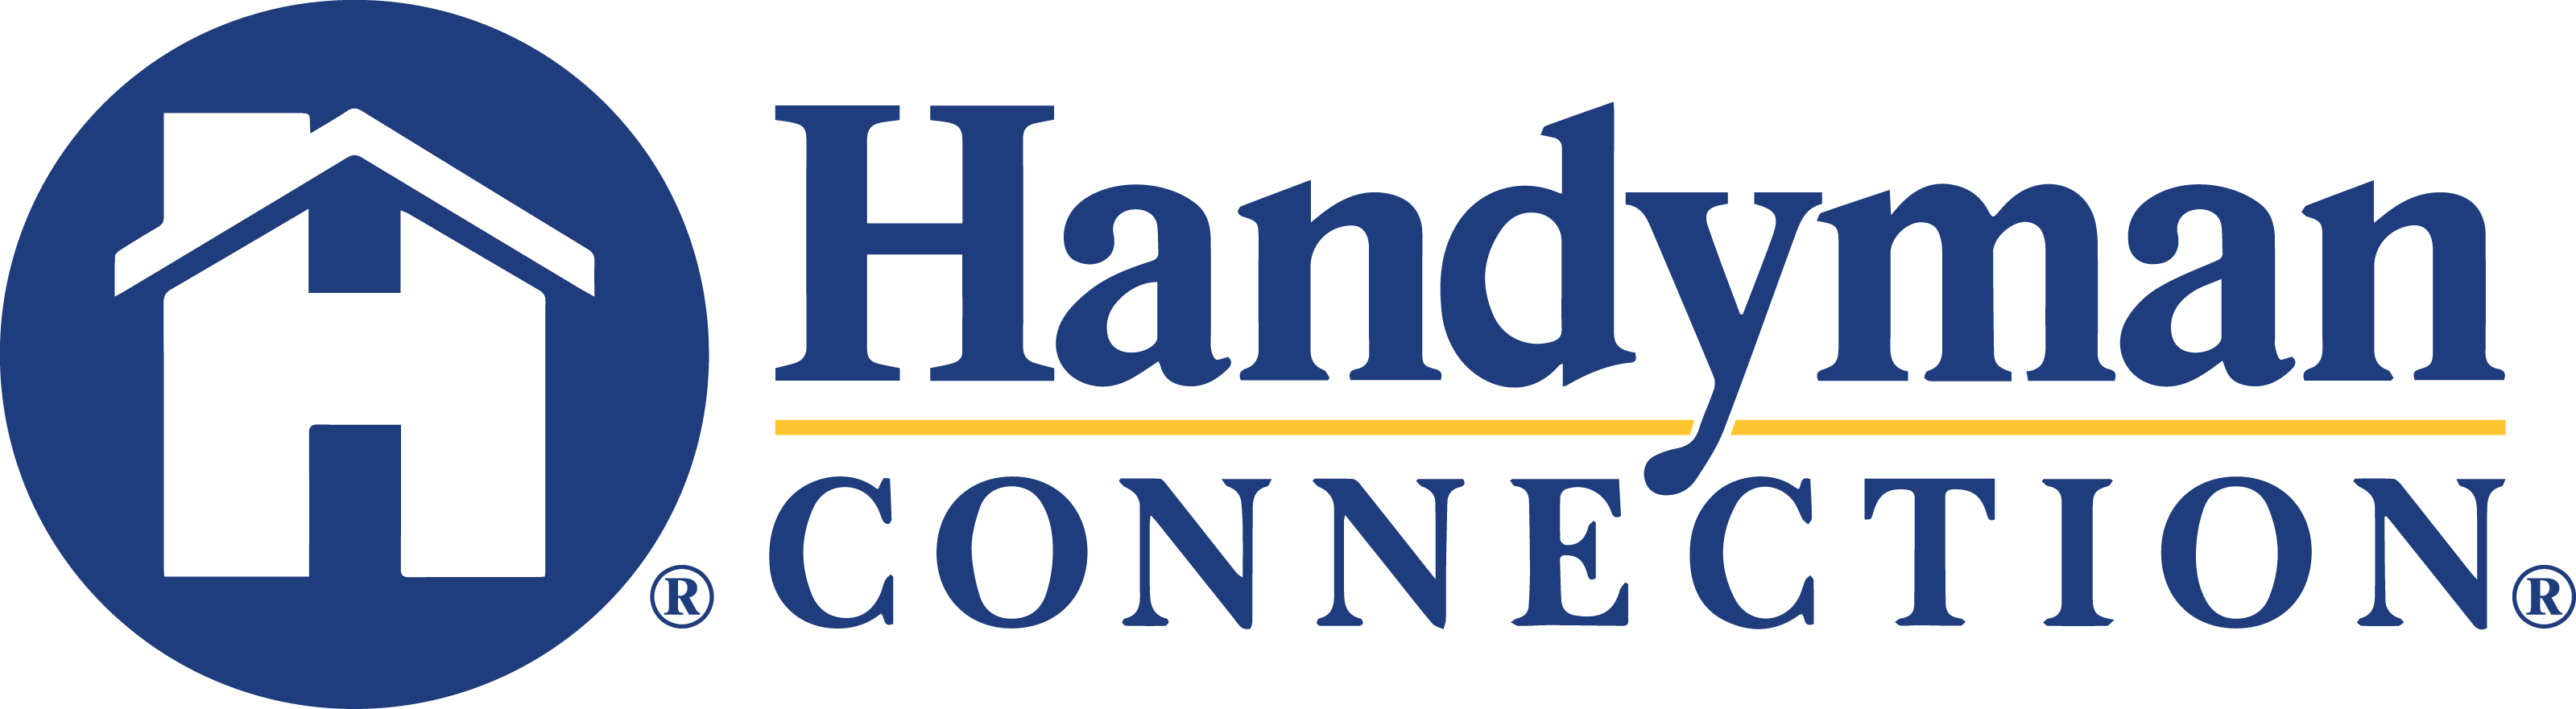 https://handymanconnection.com/mckinney/wp-content/uploads/sites/31/2021/05/HandymanConnection-logo-2-1.png